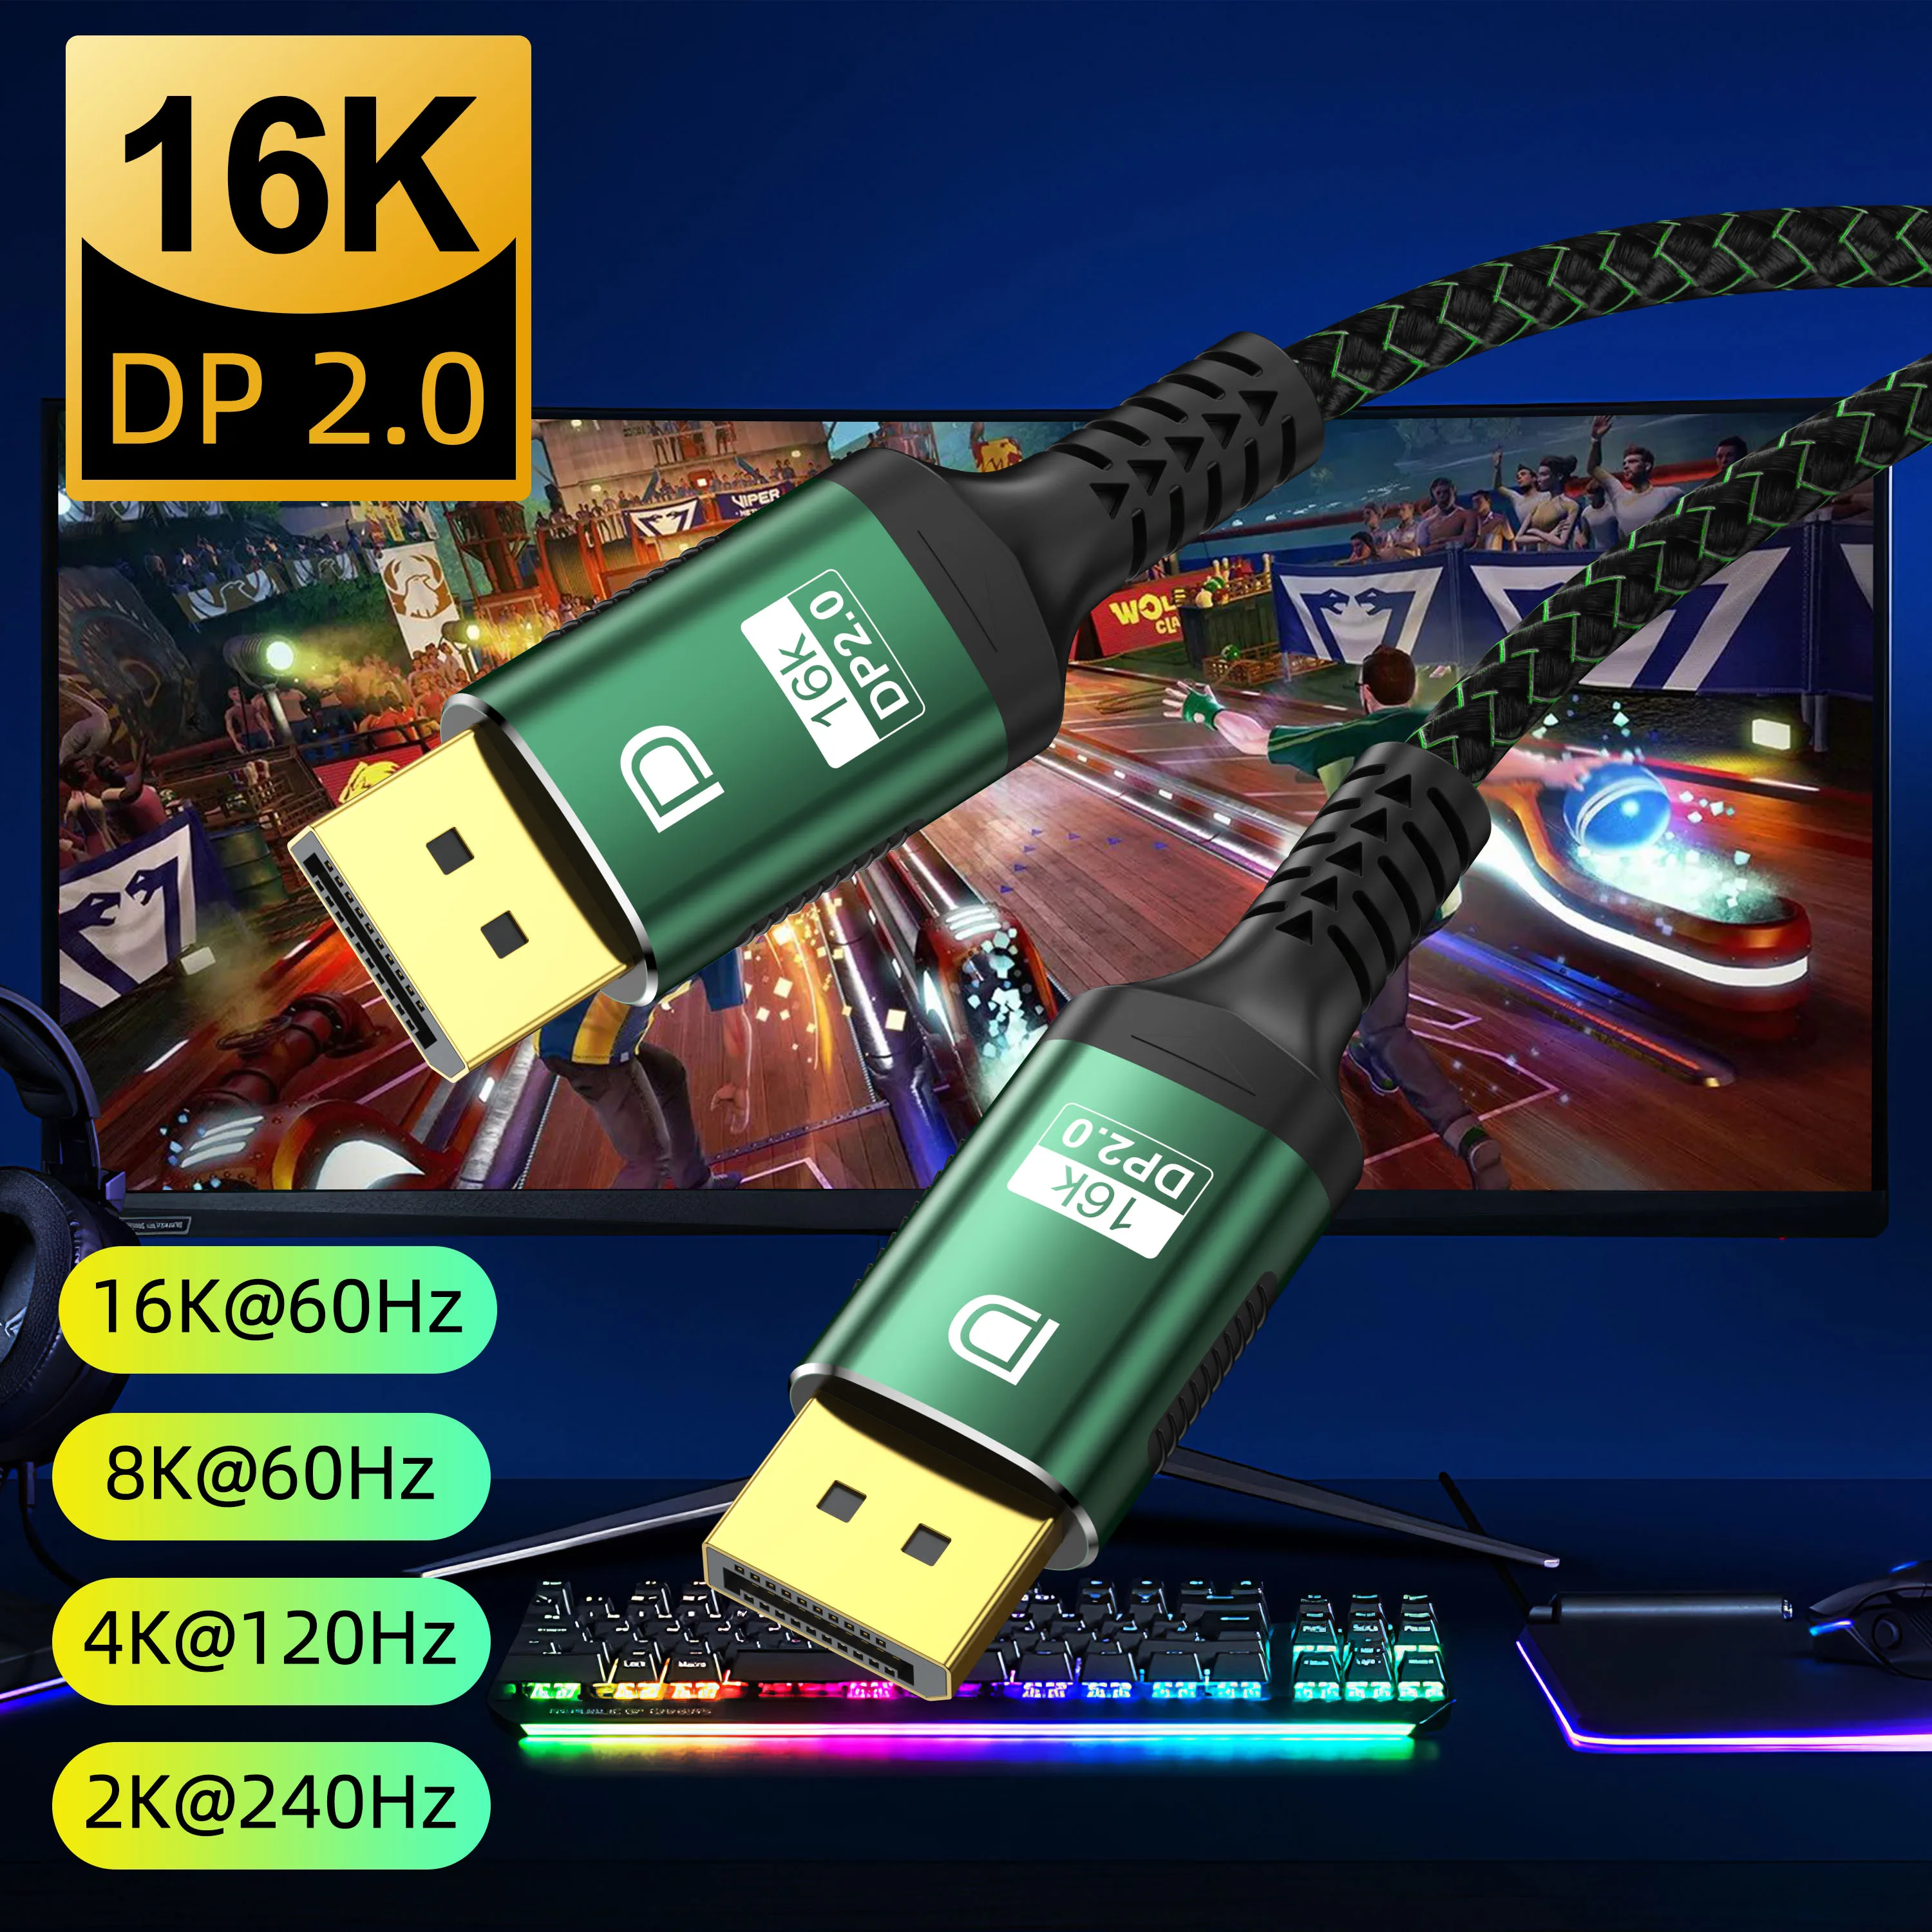 CABLE DISPLAYPORT VERS HDMI 4K-2K